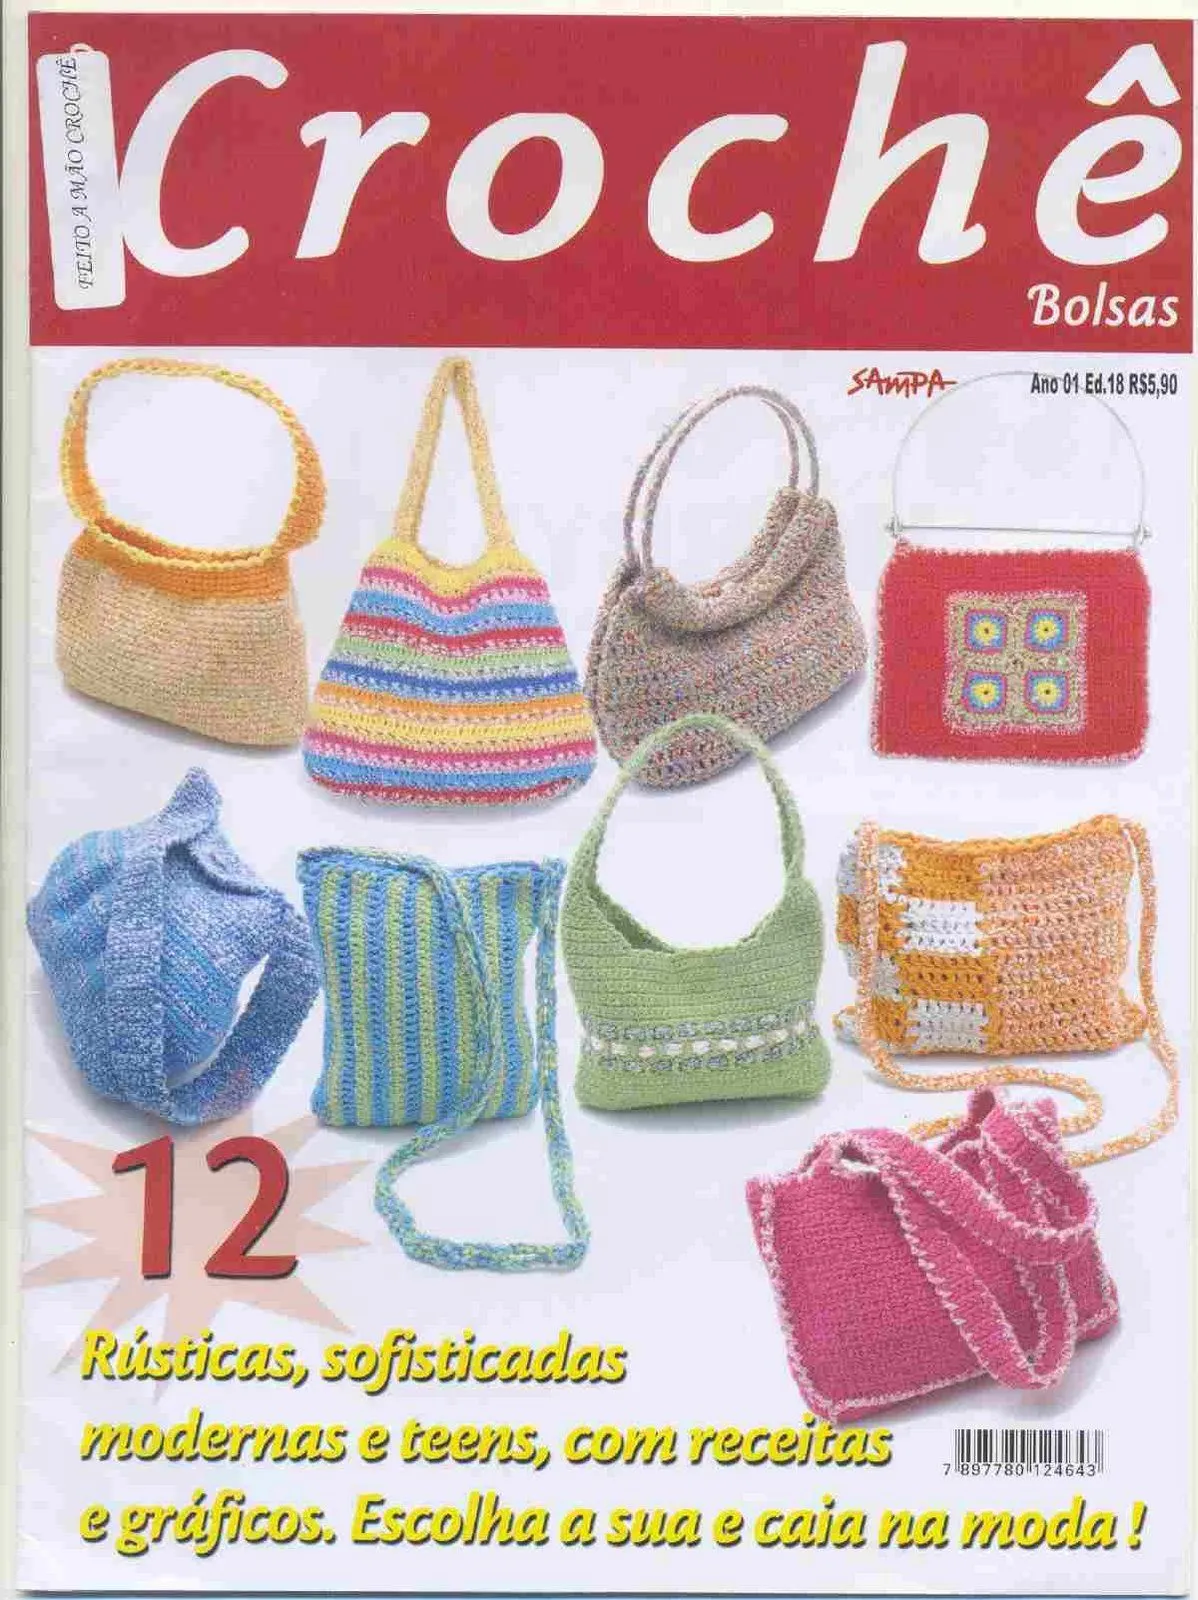 Revistas de crochet: Bolsos en crochet